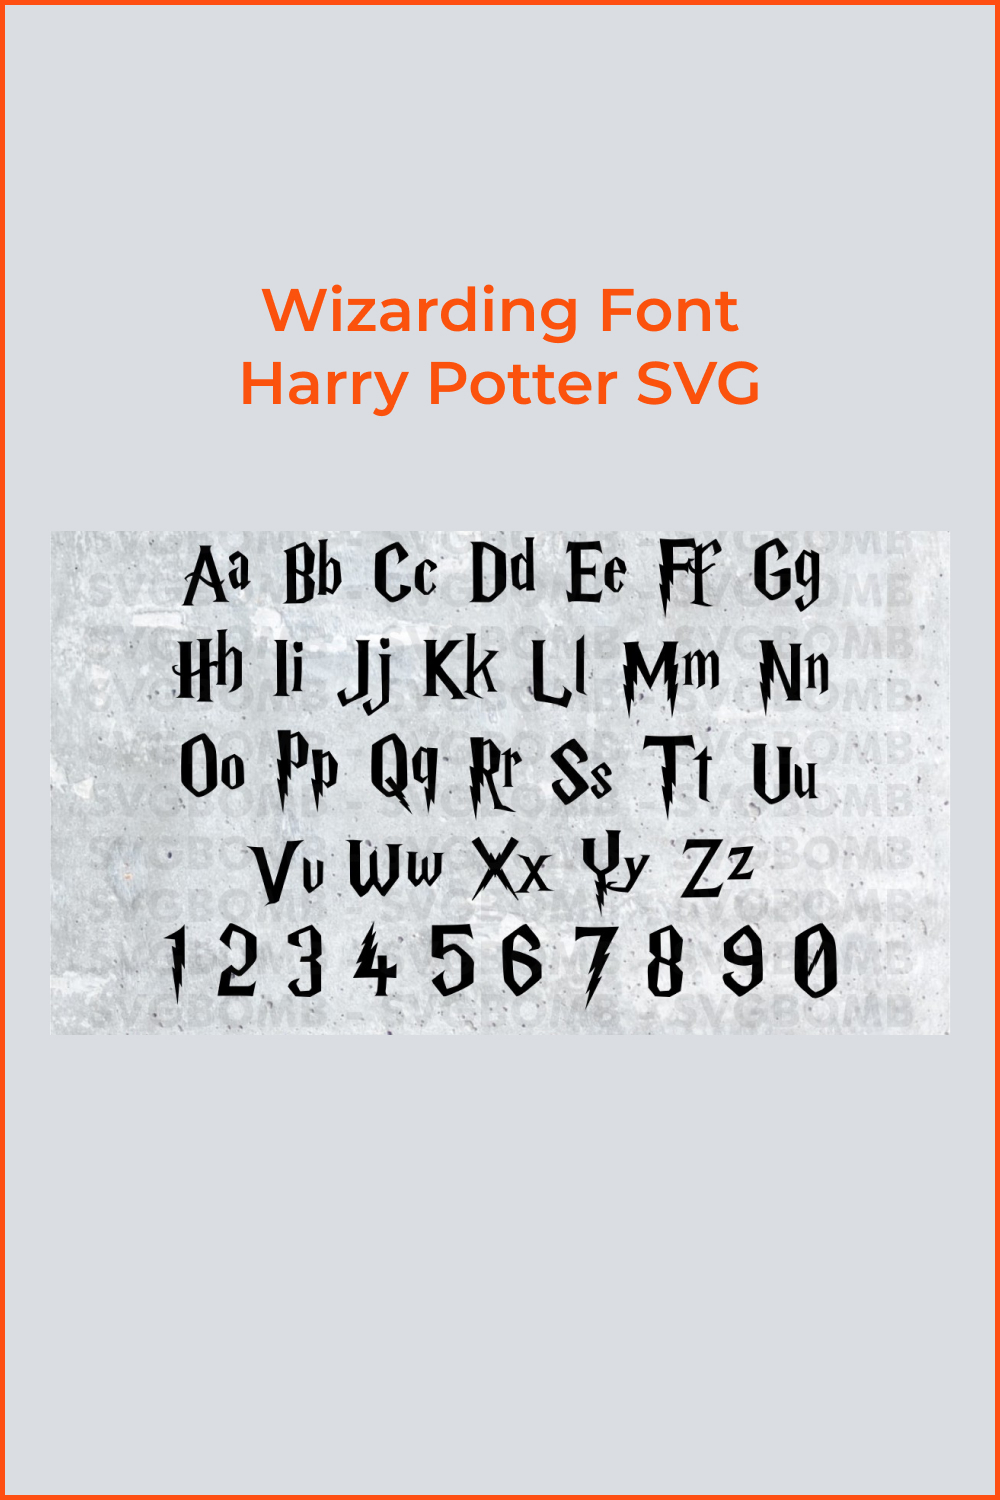 Harry Potter style alphabet.